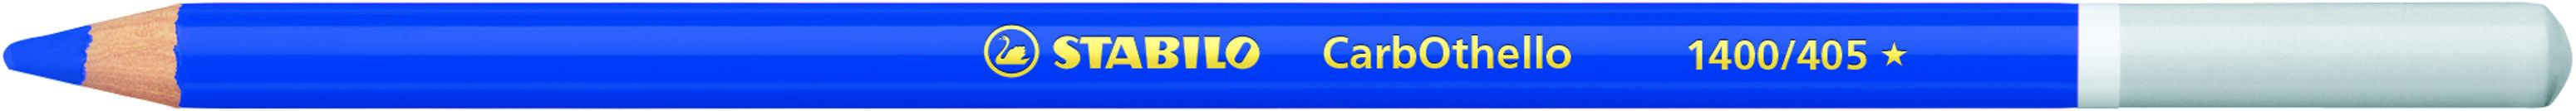 CARBOTHELLO PASTEL PENCILS - ULTRAMARINE BLUE 1400/405